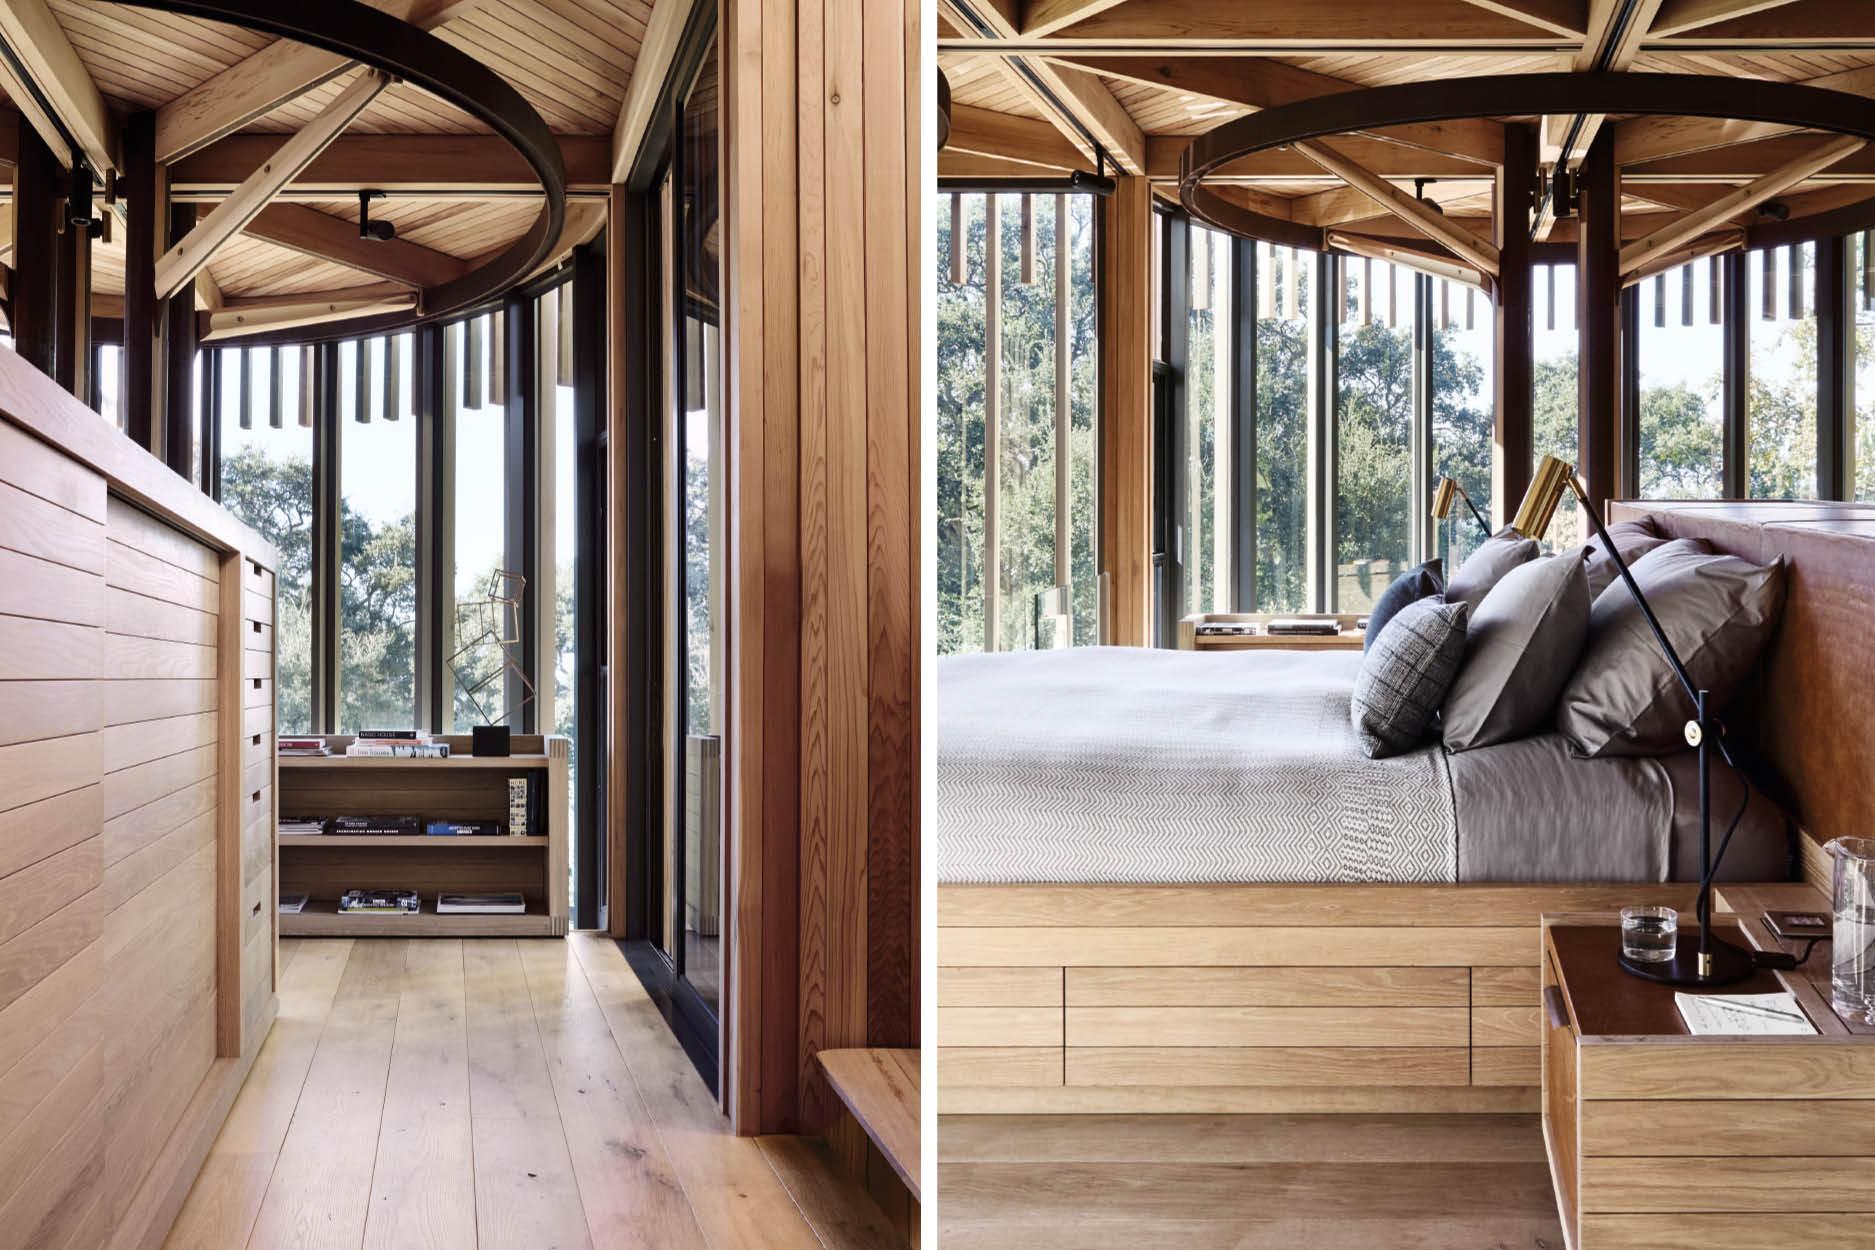 Step Inside a Modern Cabin Hidden in the Woods